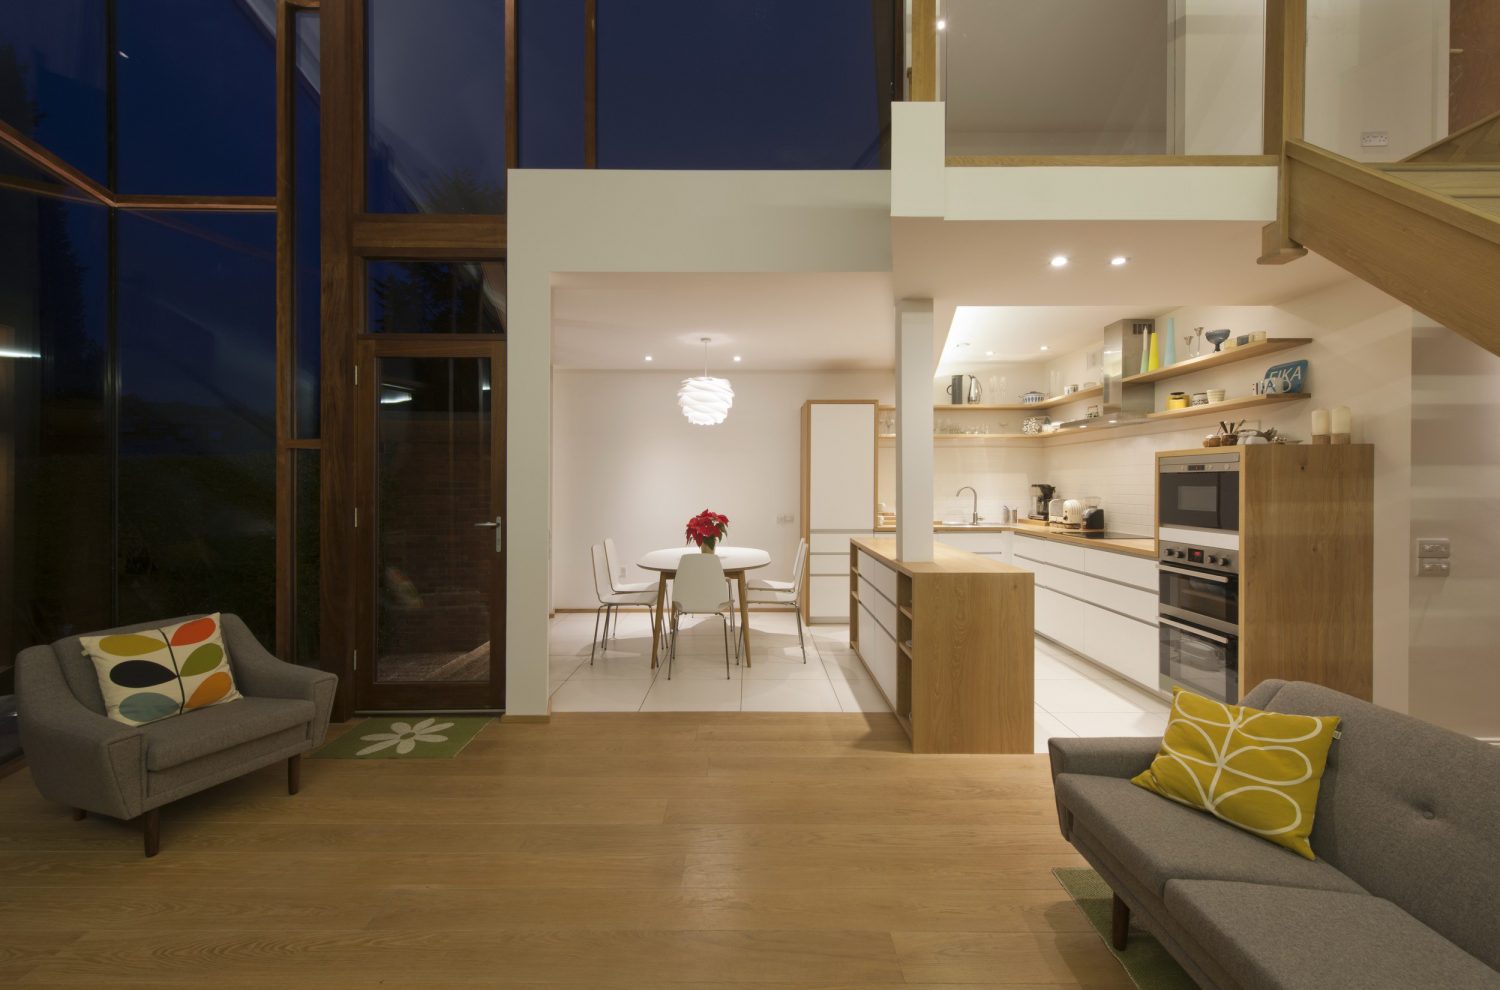 Solen Vinklar – Family House Extension by David Blaikie Architects